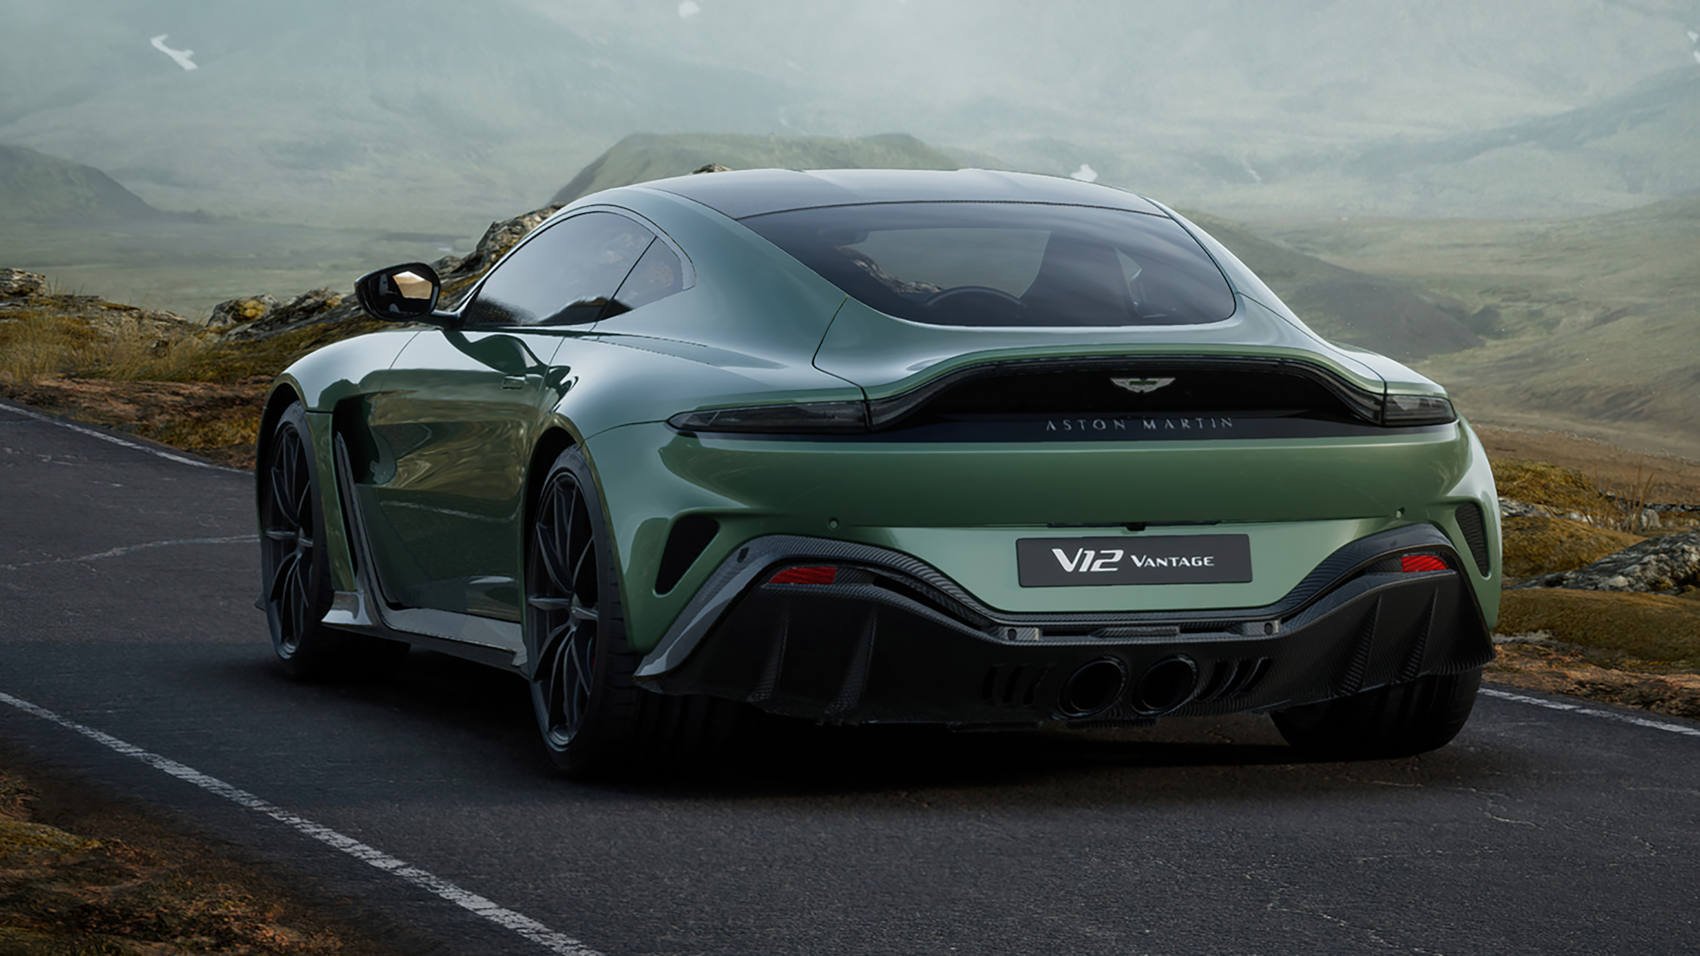 Aston Martin V12 Vantage tył auta na tle krajobrazu